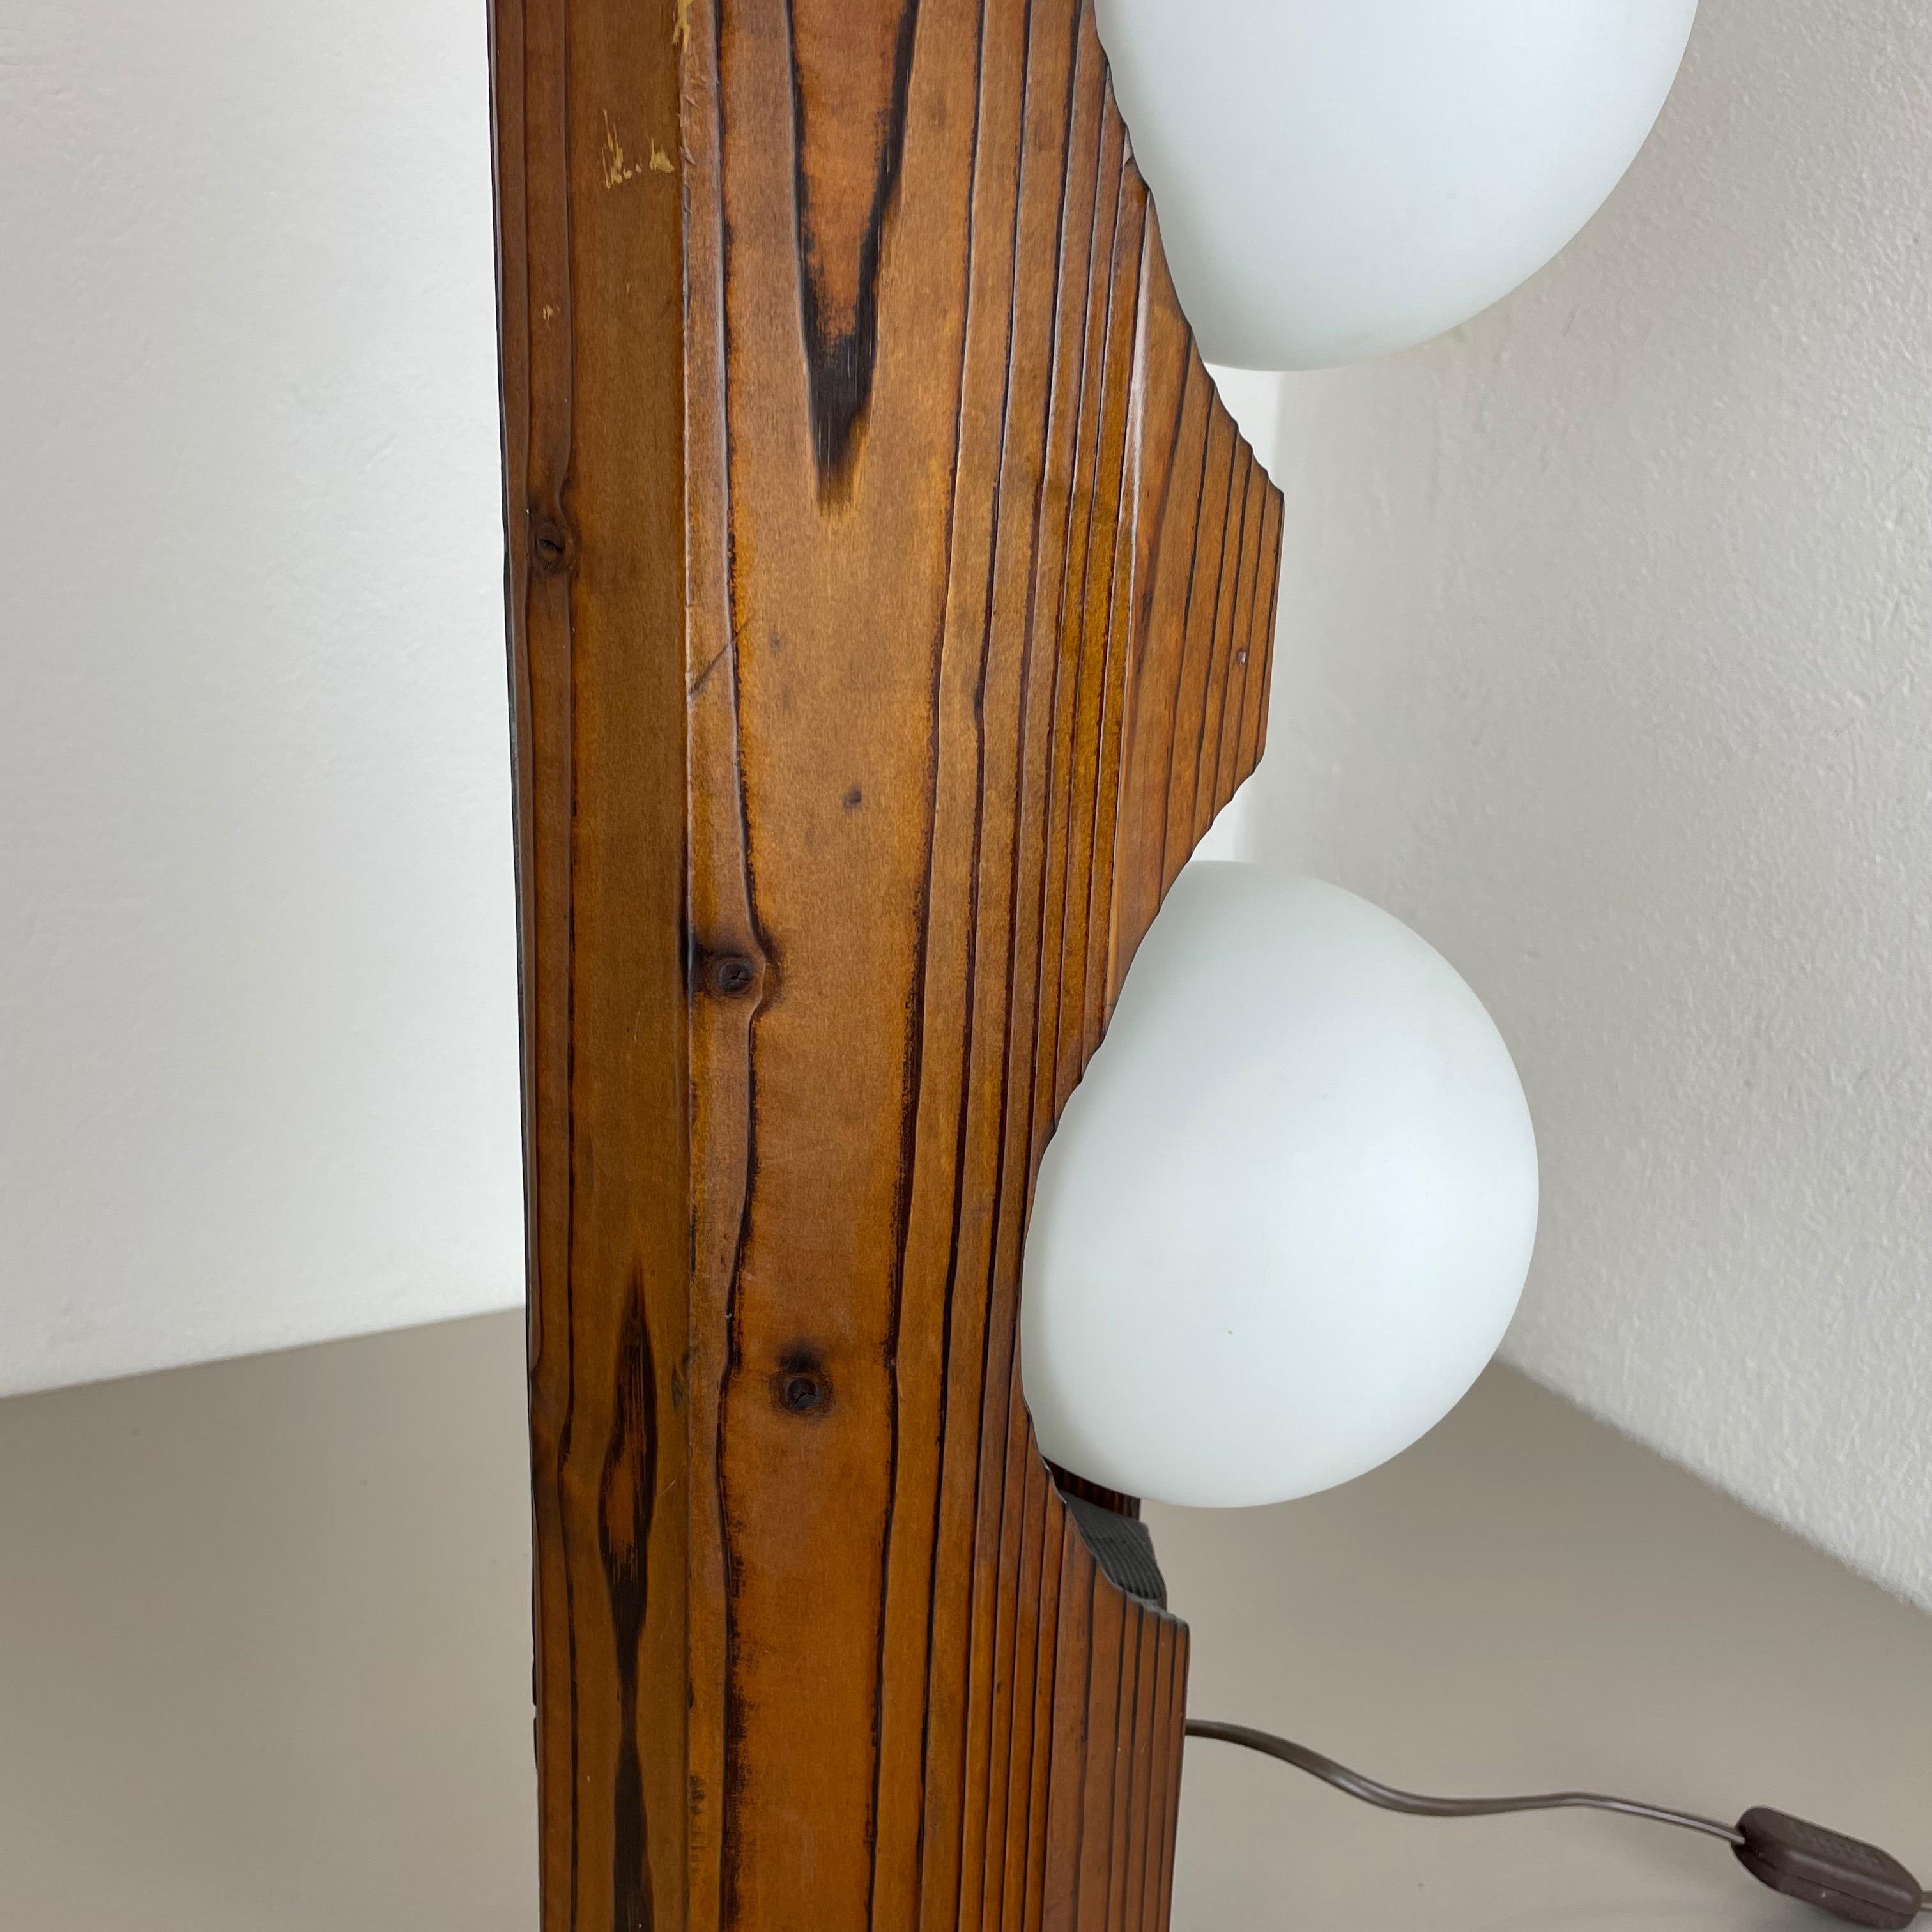 Large Organic Sculptural Pine Wooden Floor Light Made Temde Lights Germany 1970s For Sale 10